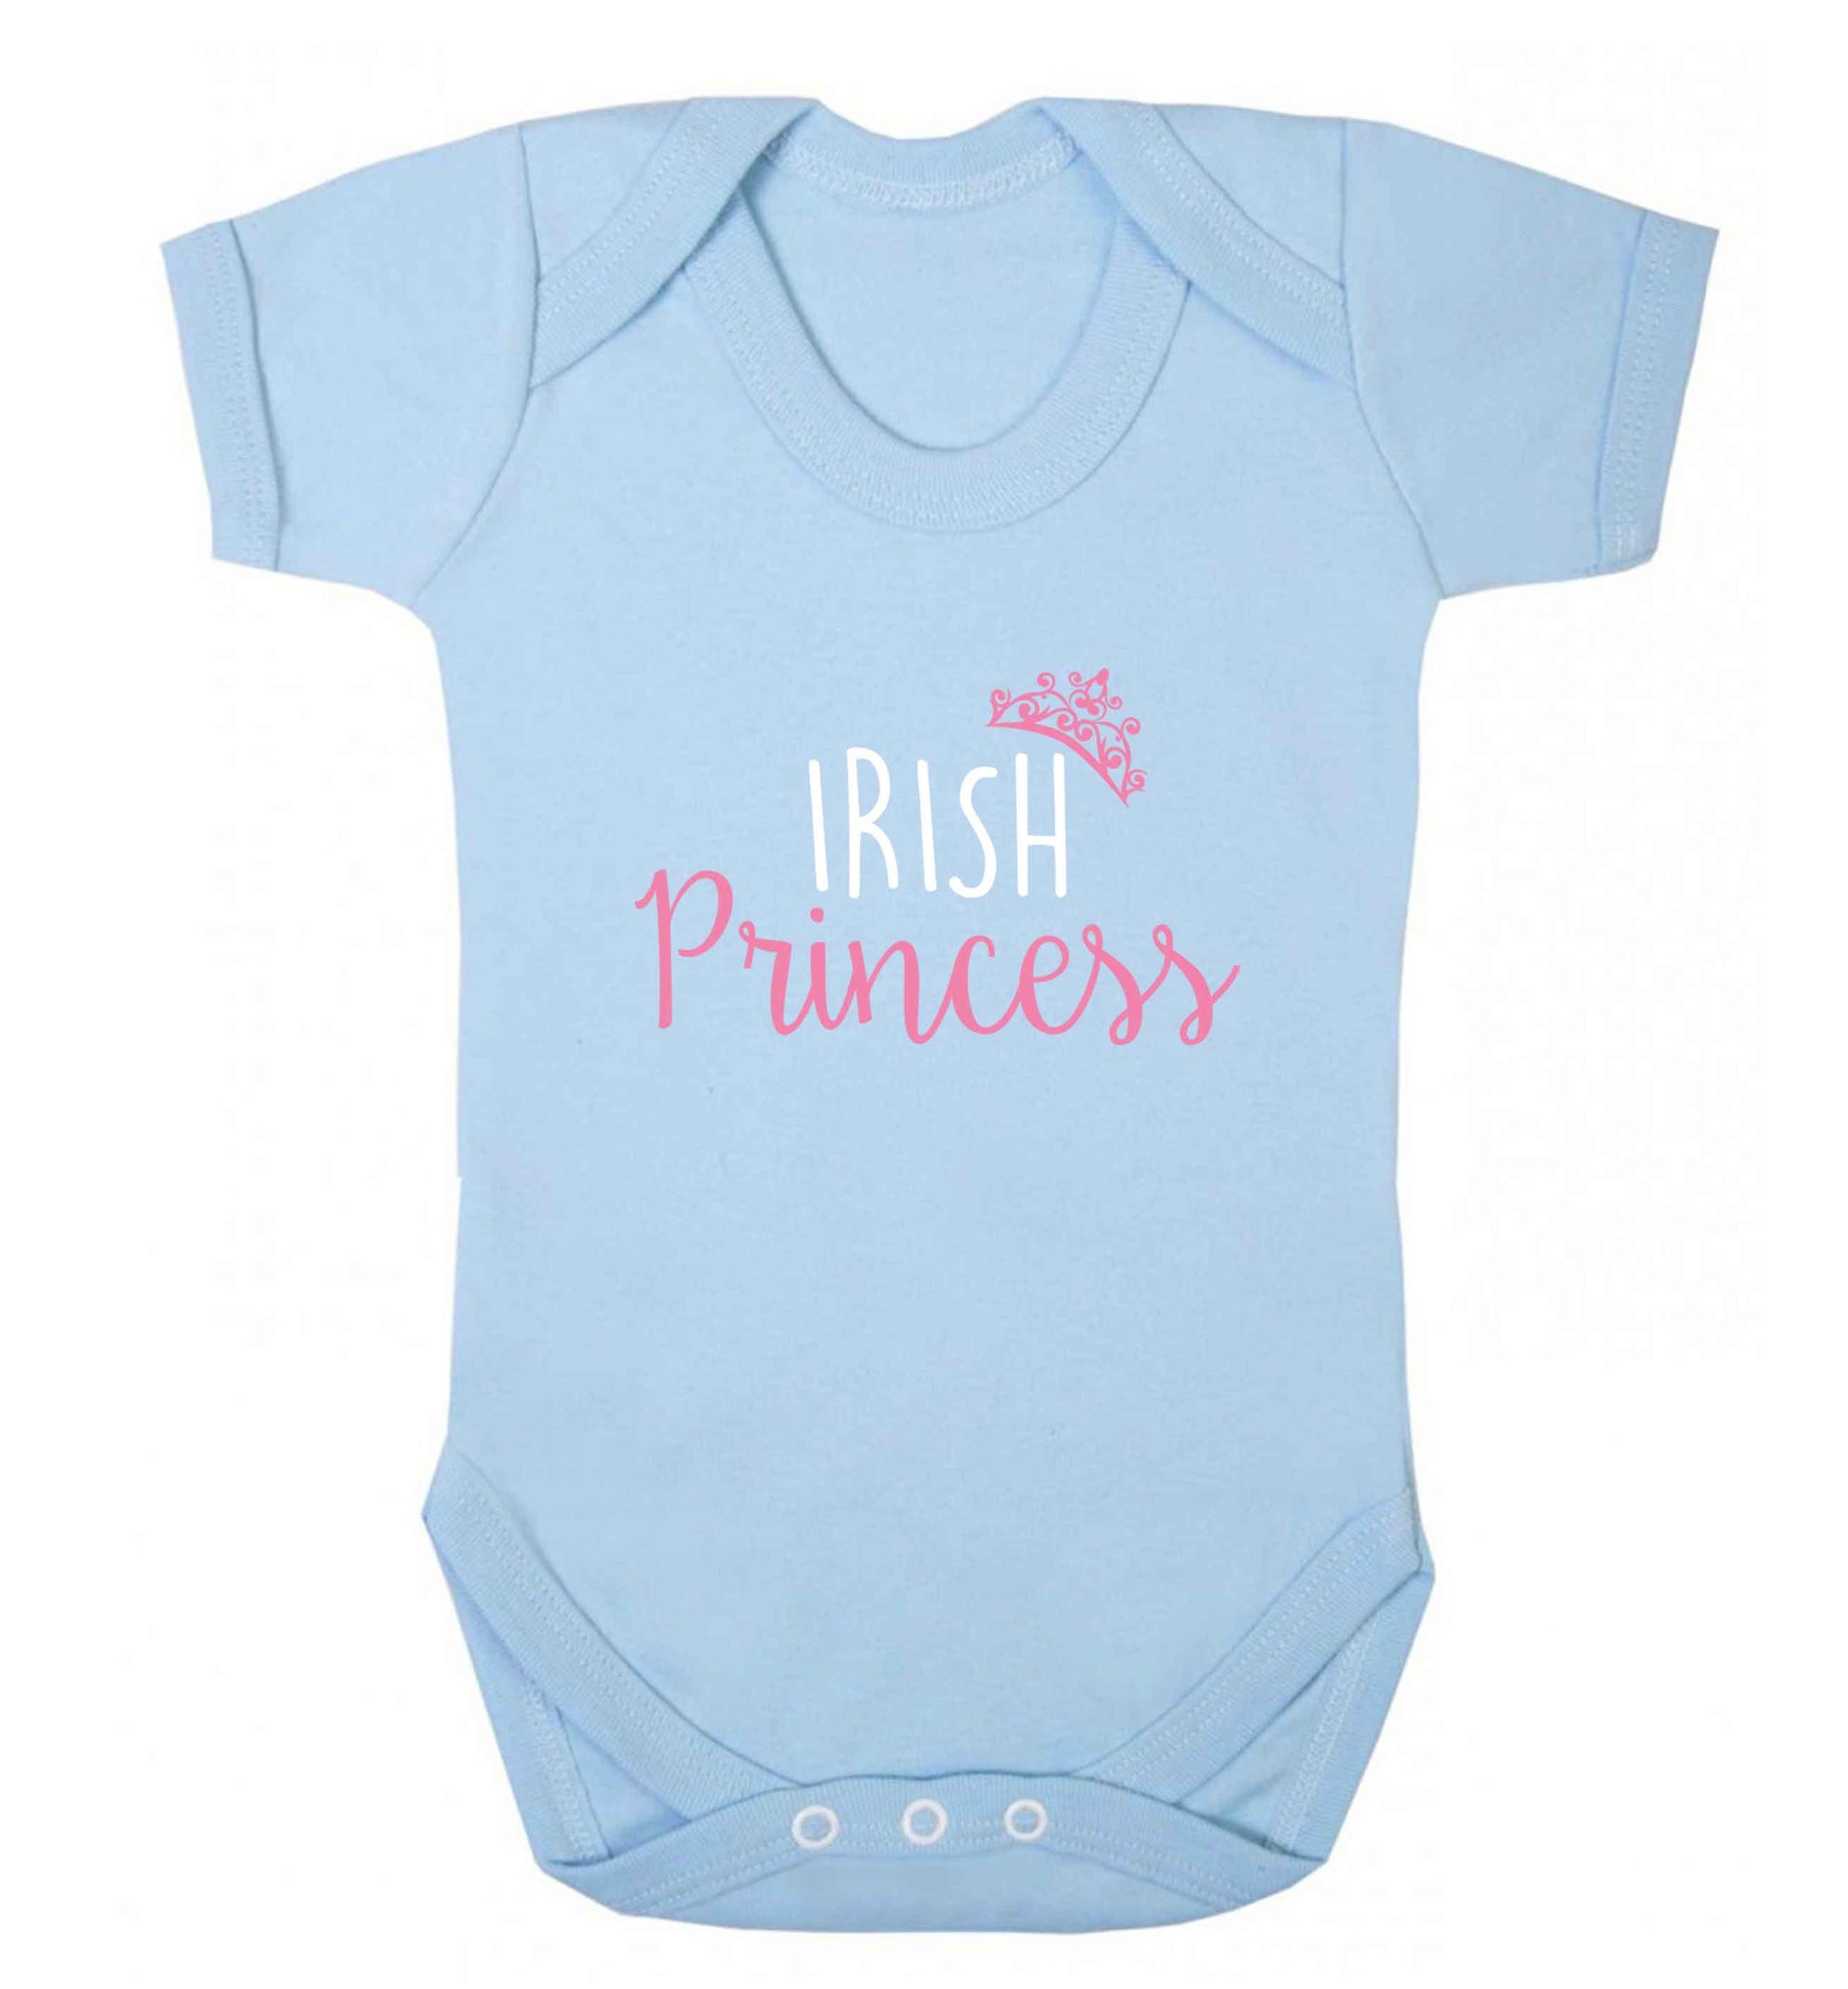 Irish princess baby vest pale blue 18-24 months